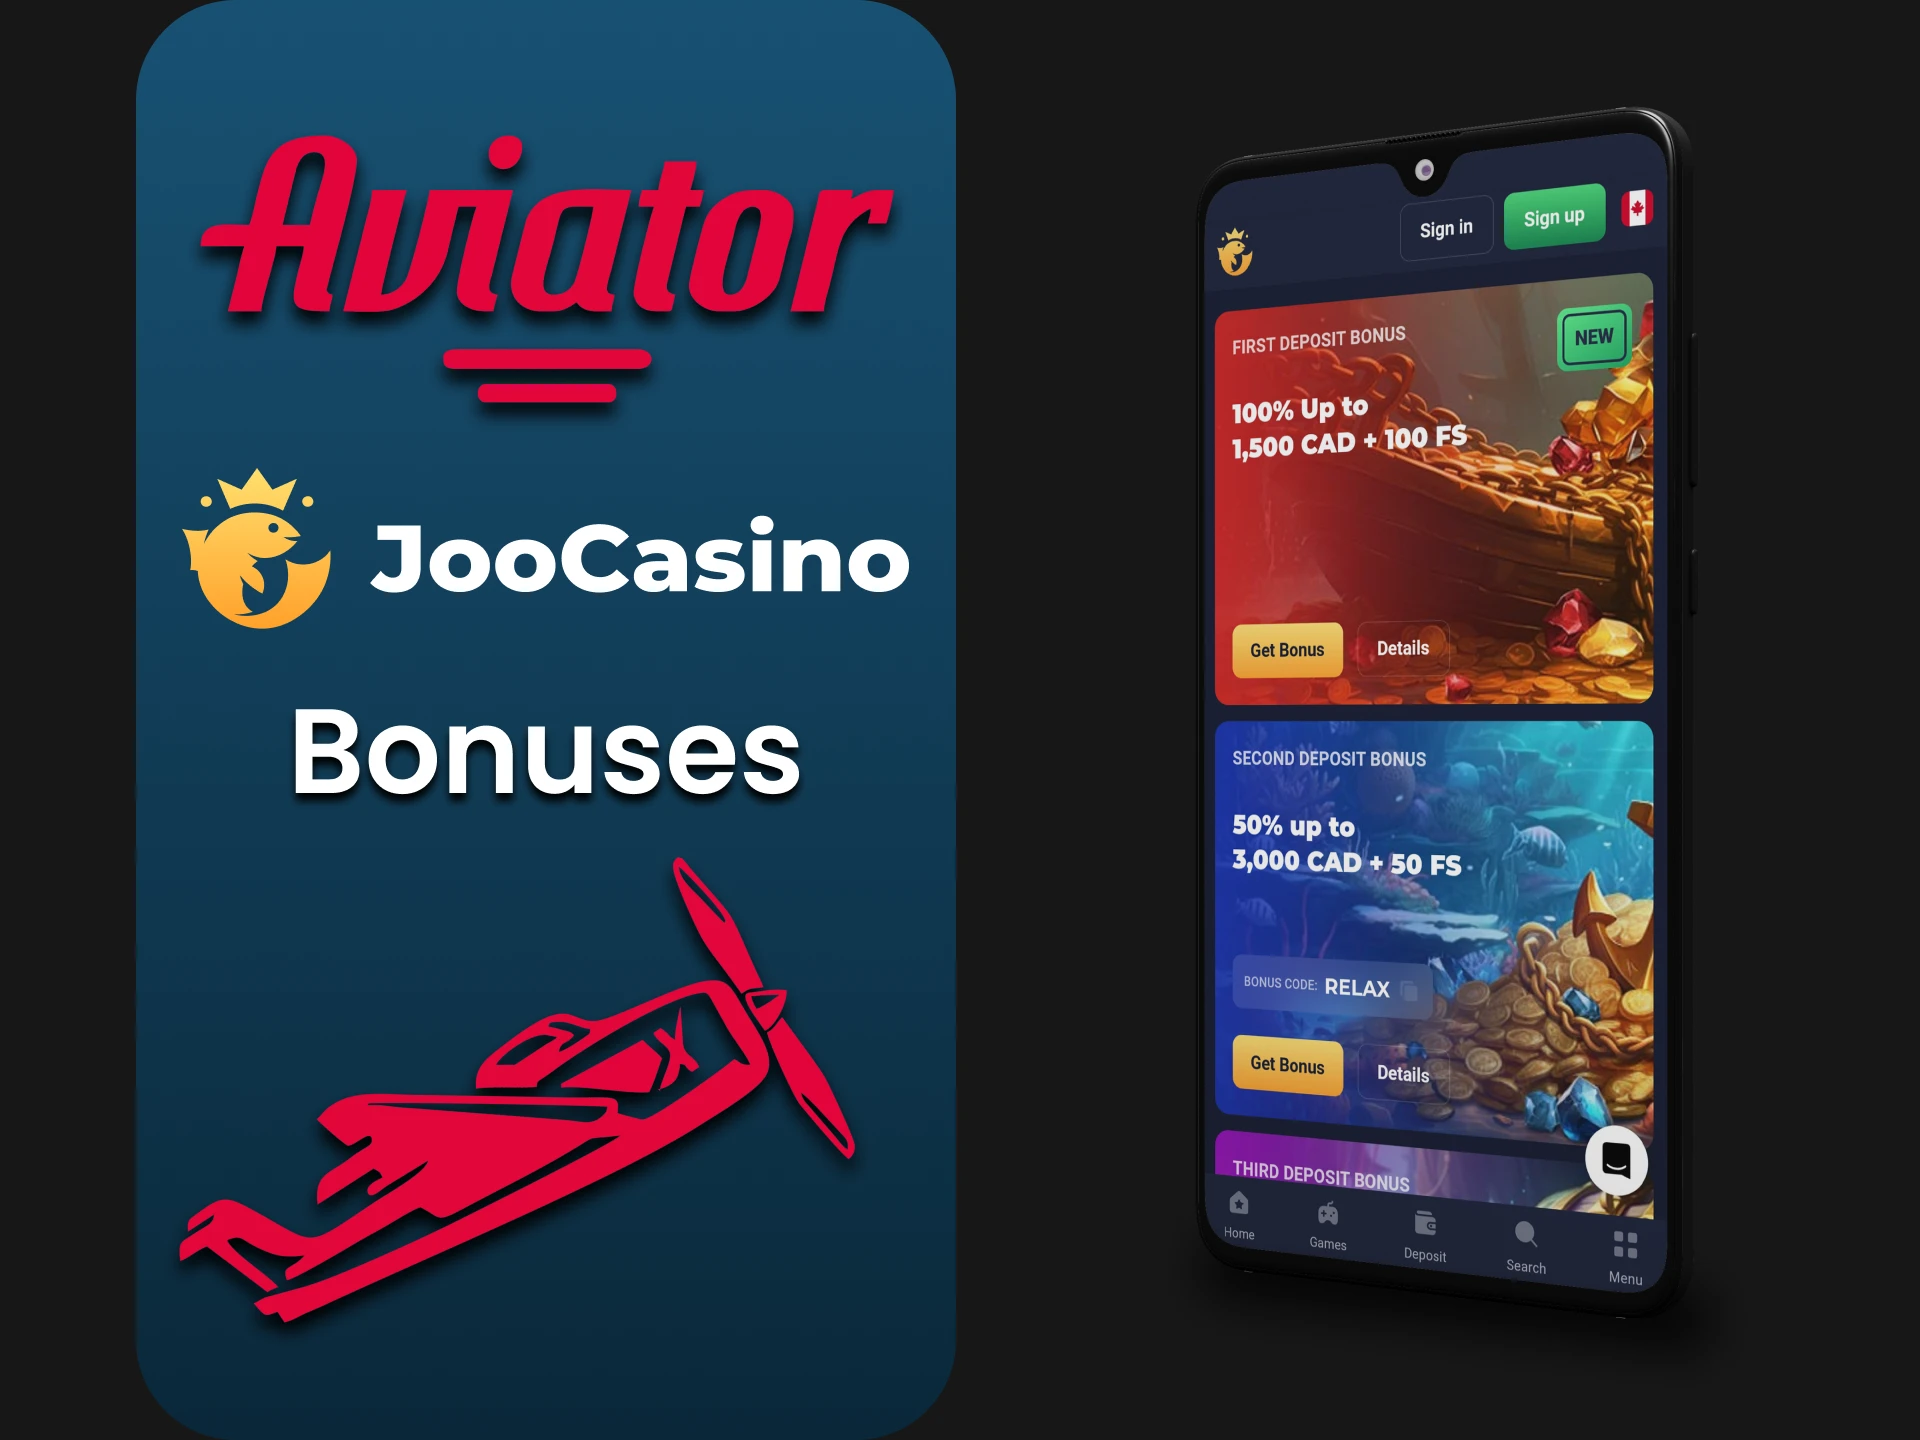 When you play Aviator in the Joo Casino app you get bonuses.